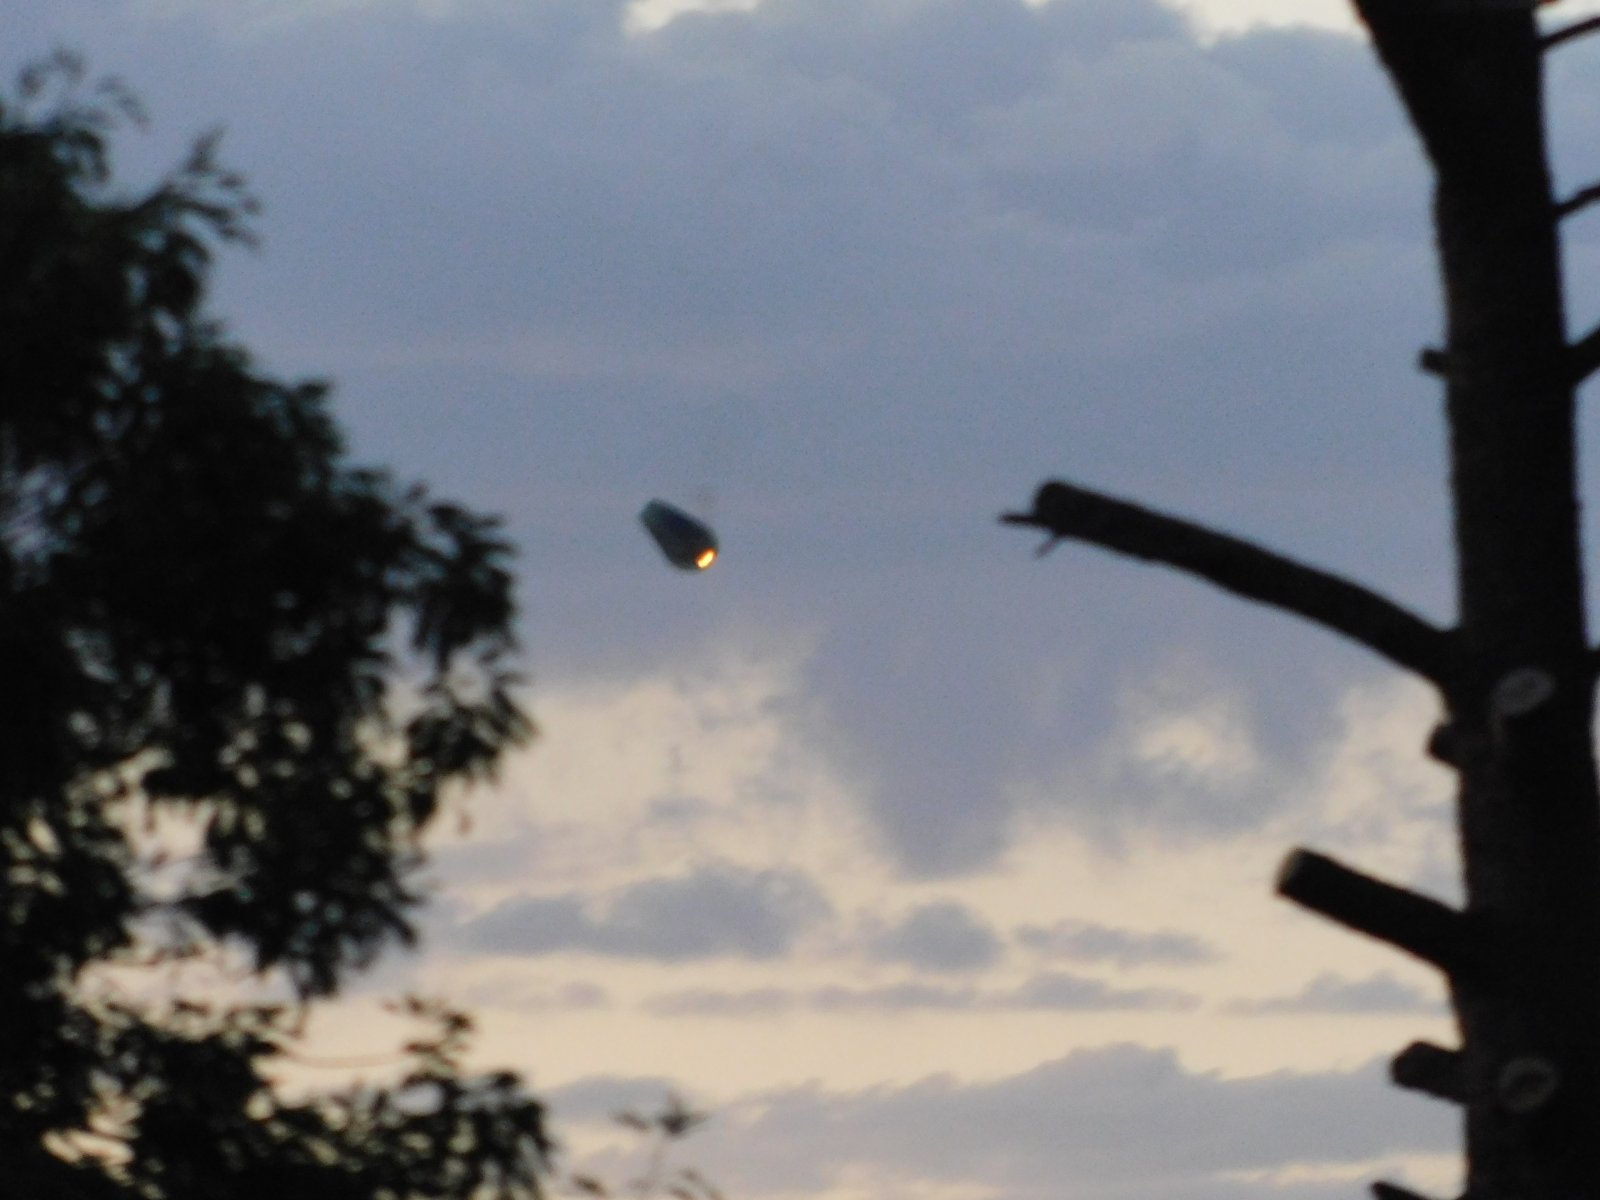 04-07-2019 UFO Sighting And Capture Albuquerque, New Mexico, U.S..jpg